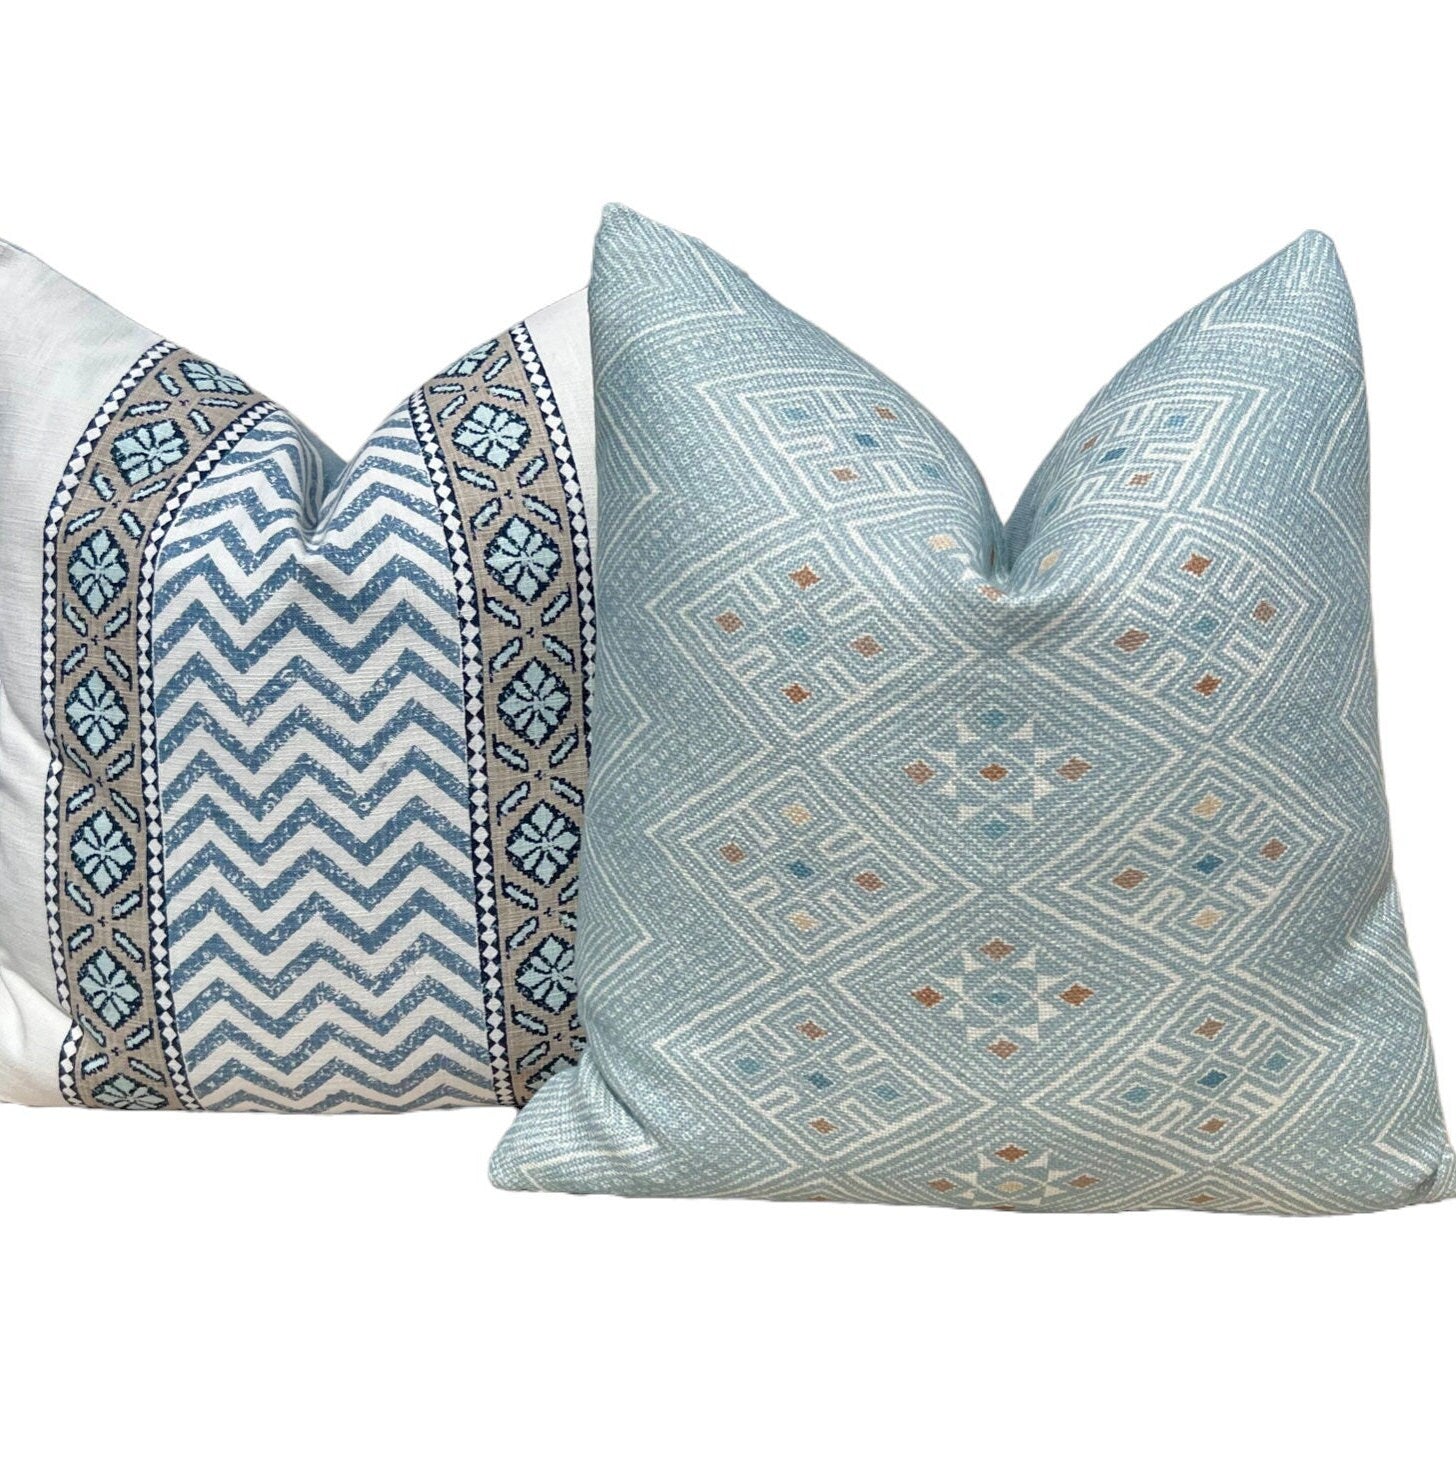 Thibaut High Plains Pillow in Spa Blue. Designer Pillows, High End Pillows, Aqua Blue Pillow Cover, Zig Zag Light Blue Accent Pillows